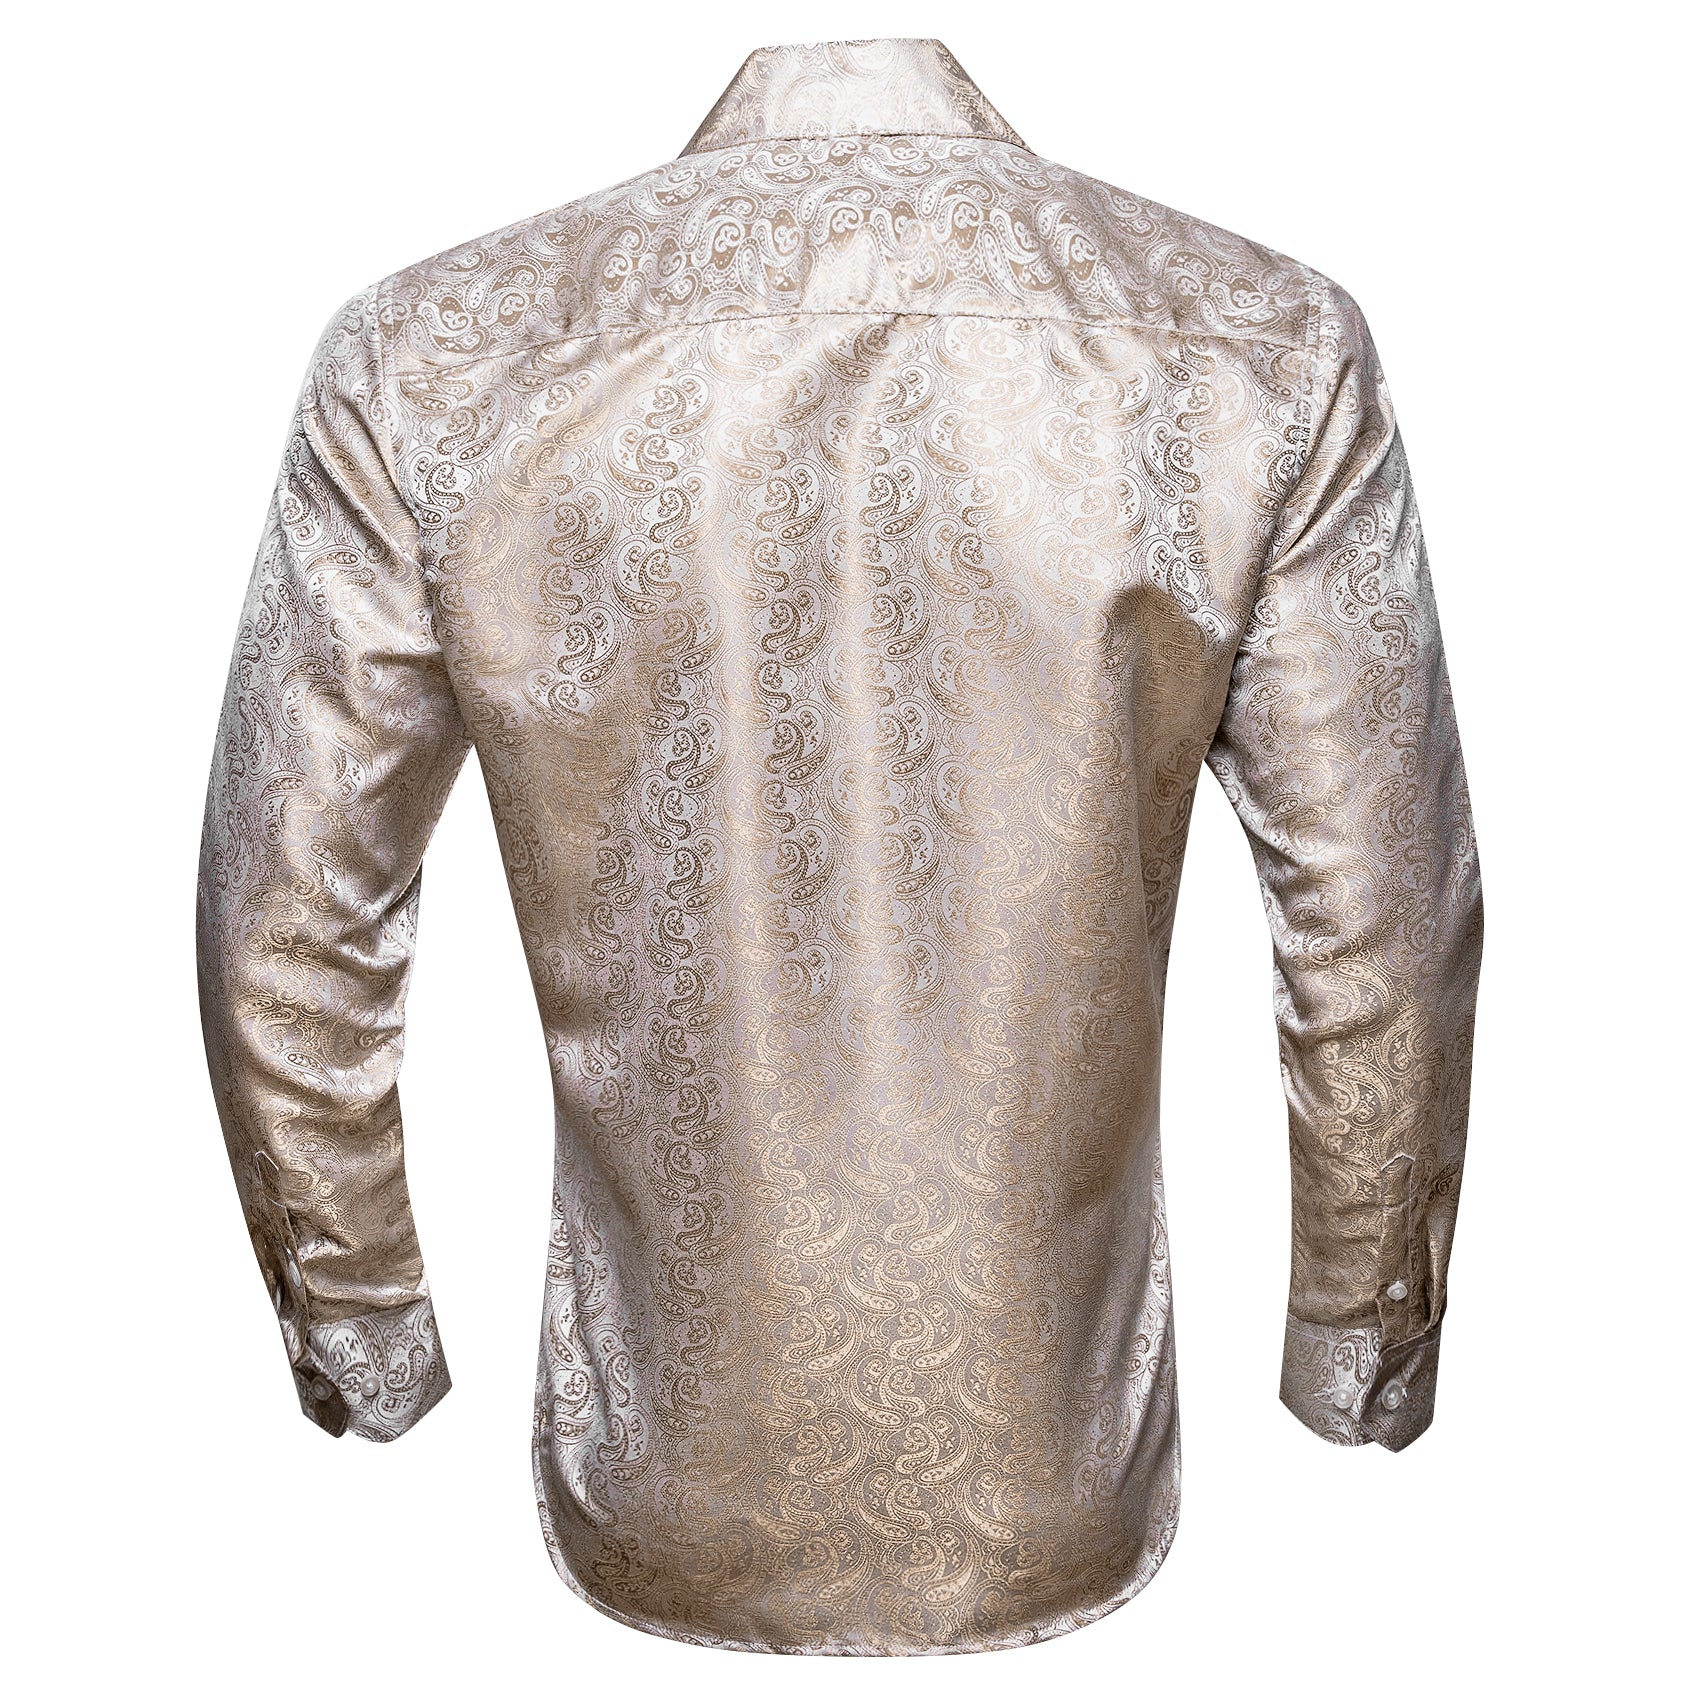 Barry.wang Gold Silver Paisley Silk Shirt